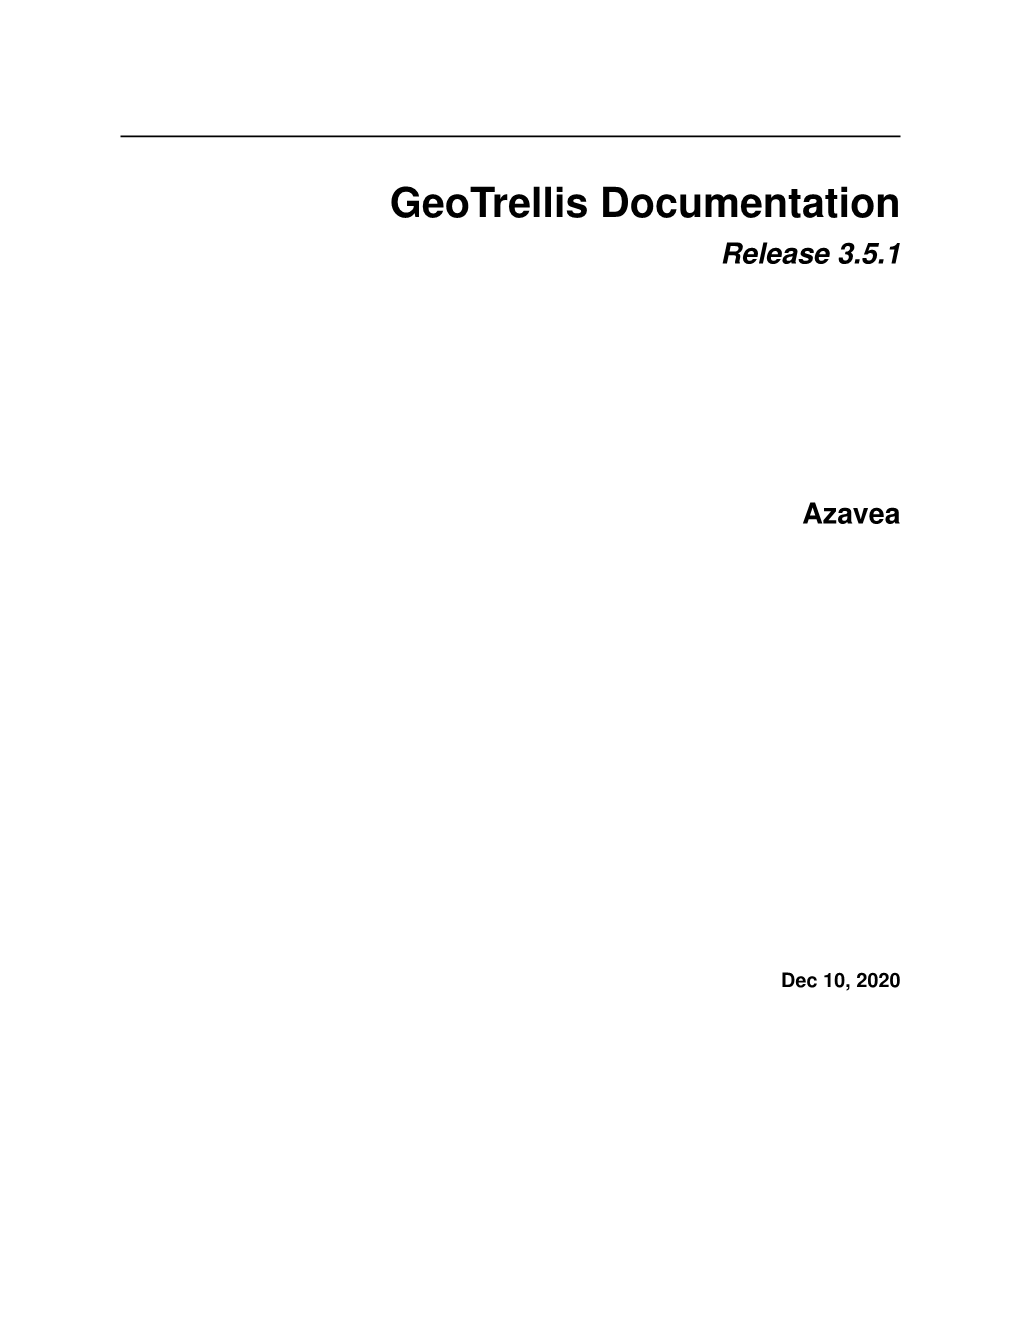 Geotrellis Documentation Release 3.5.1